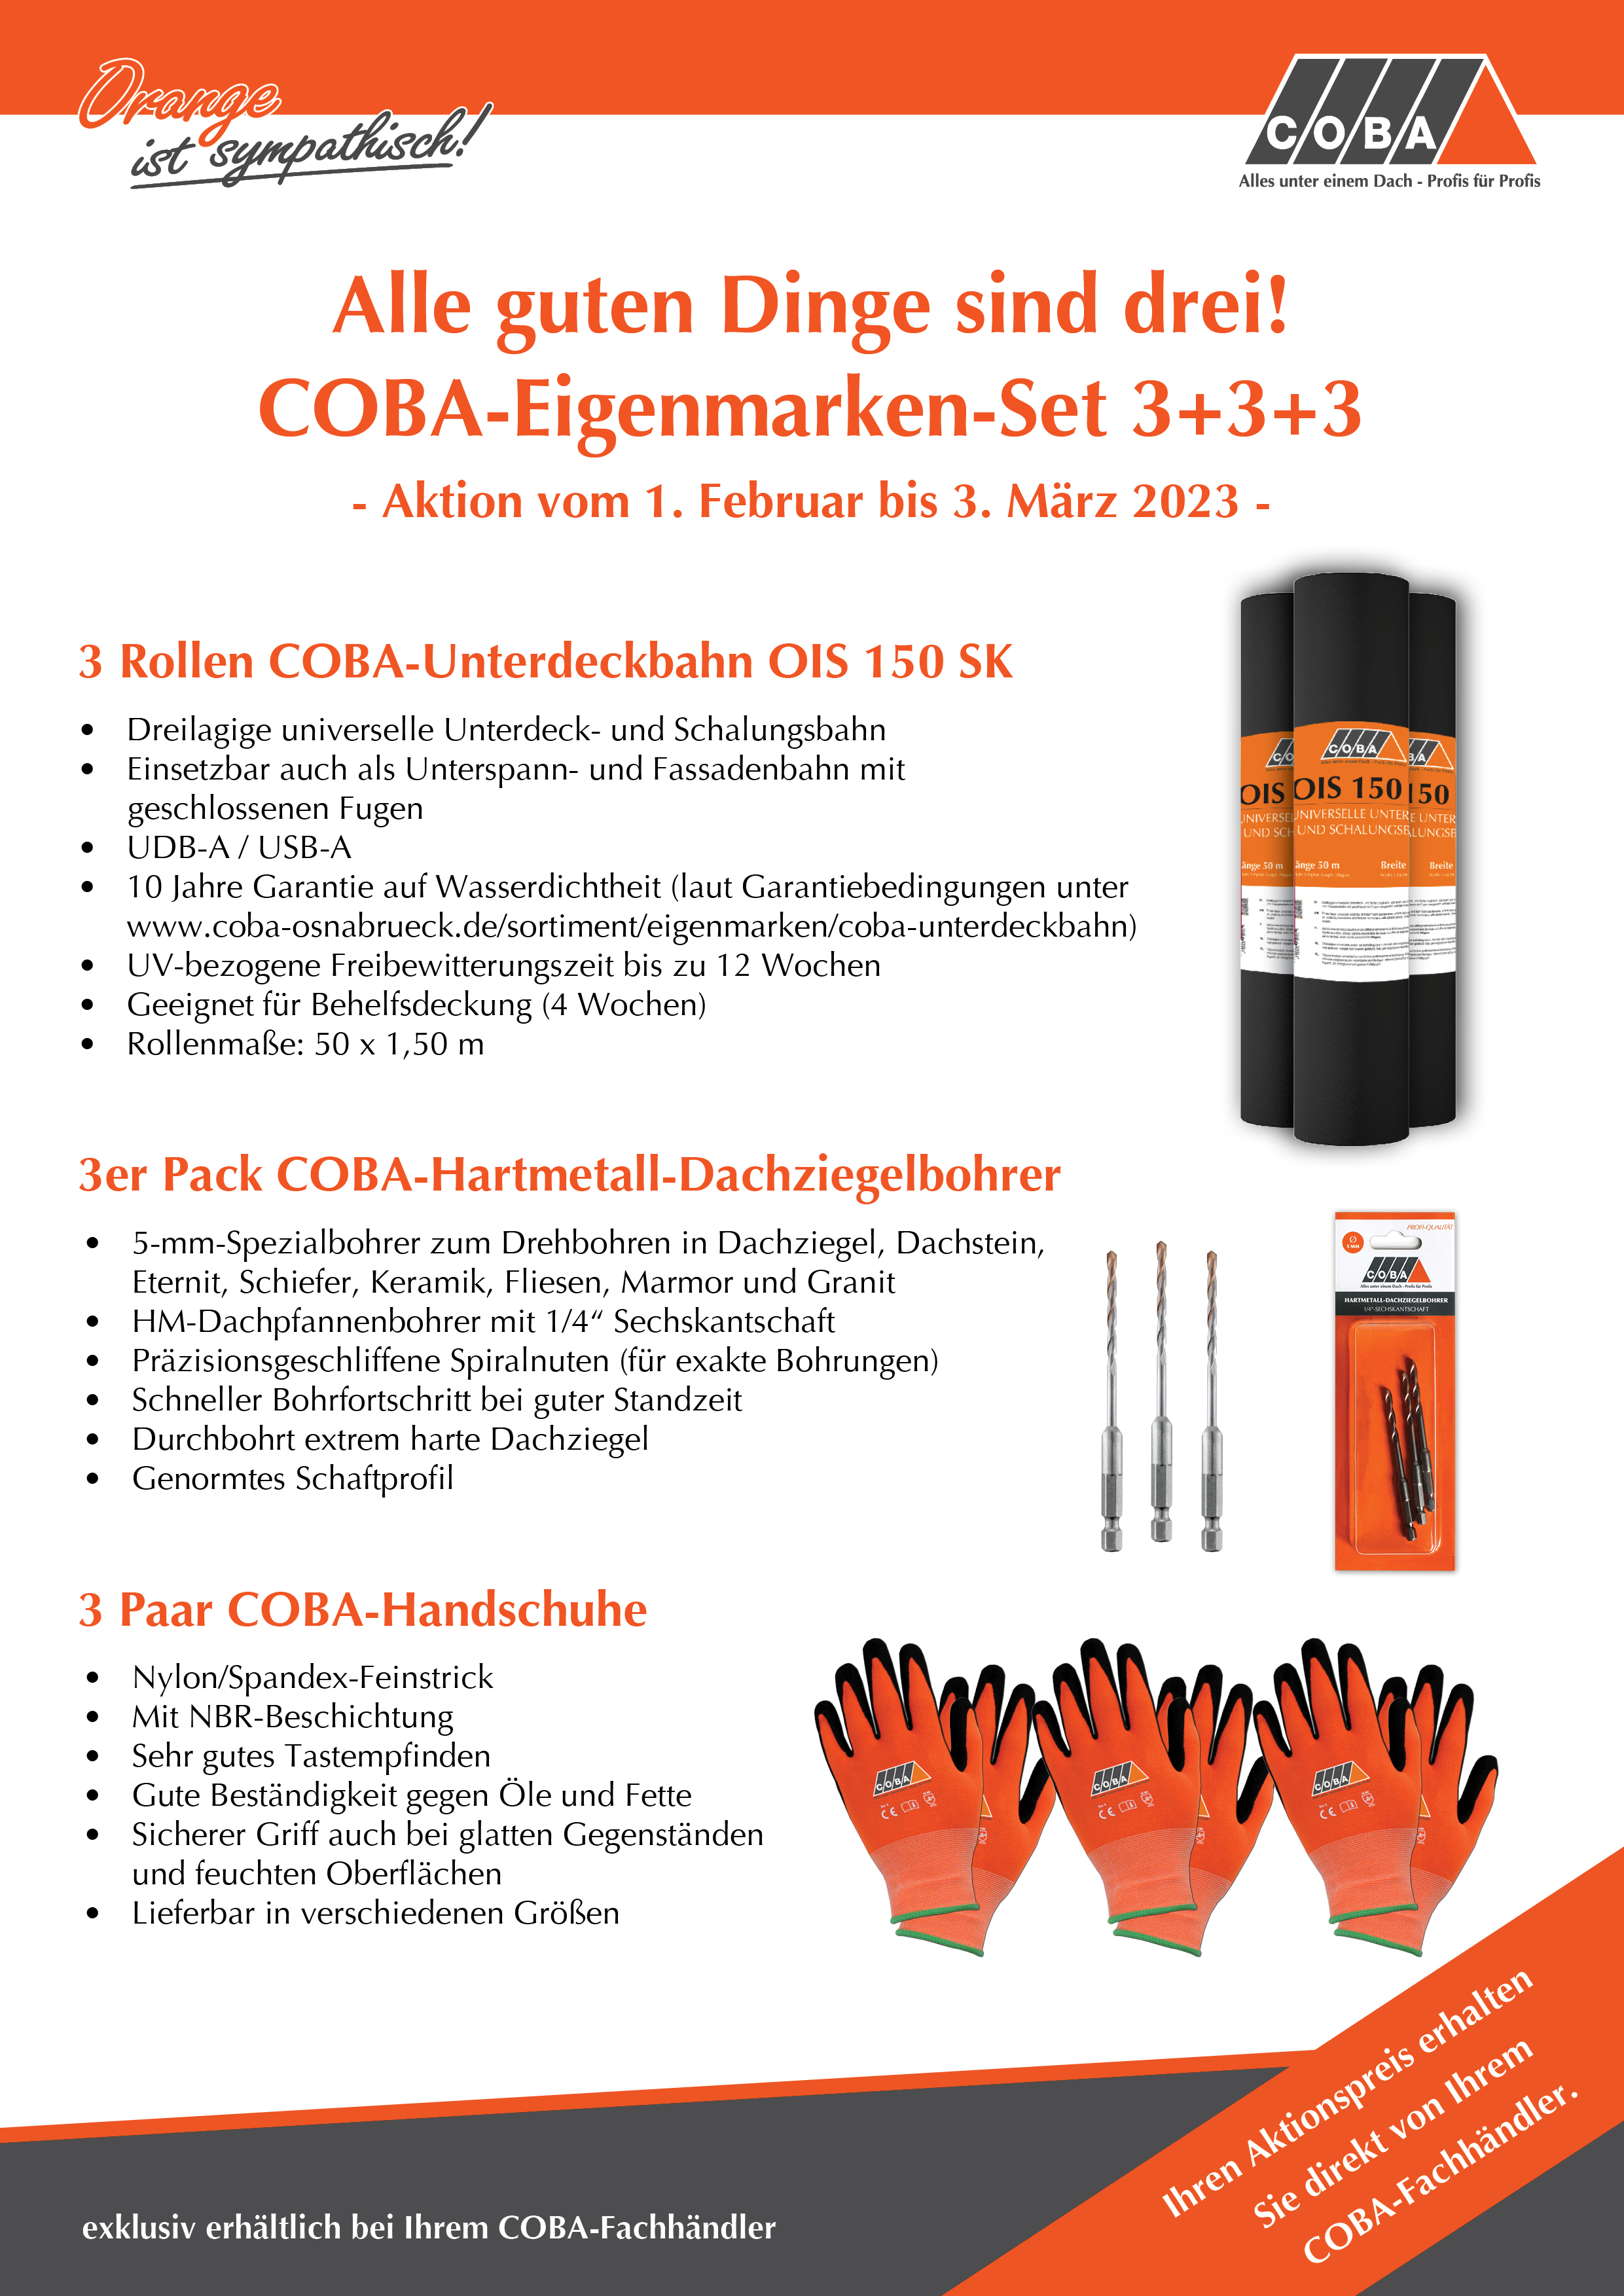 COBA-Eigenmarkenaktion 3+3+3